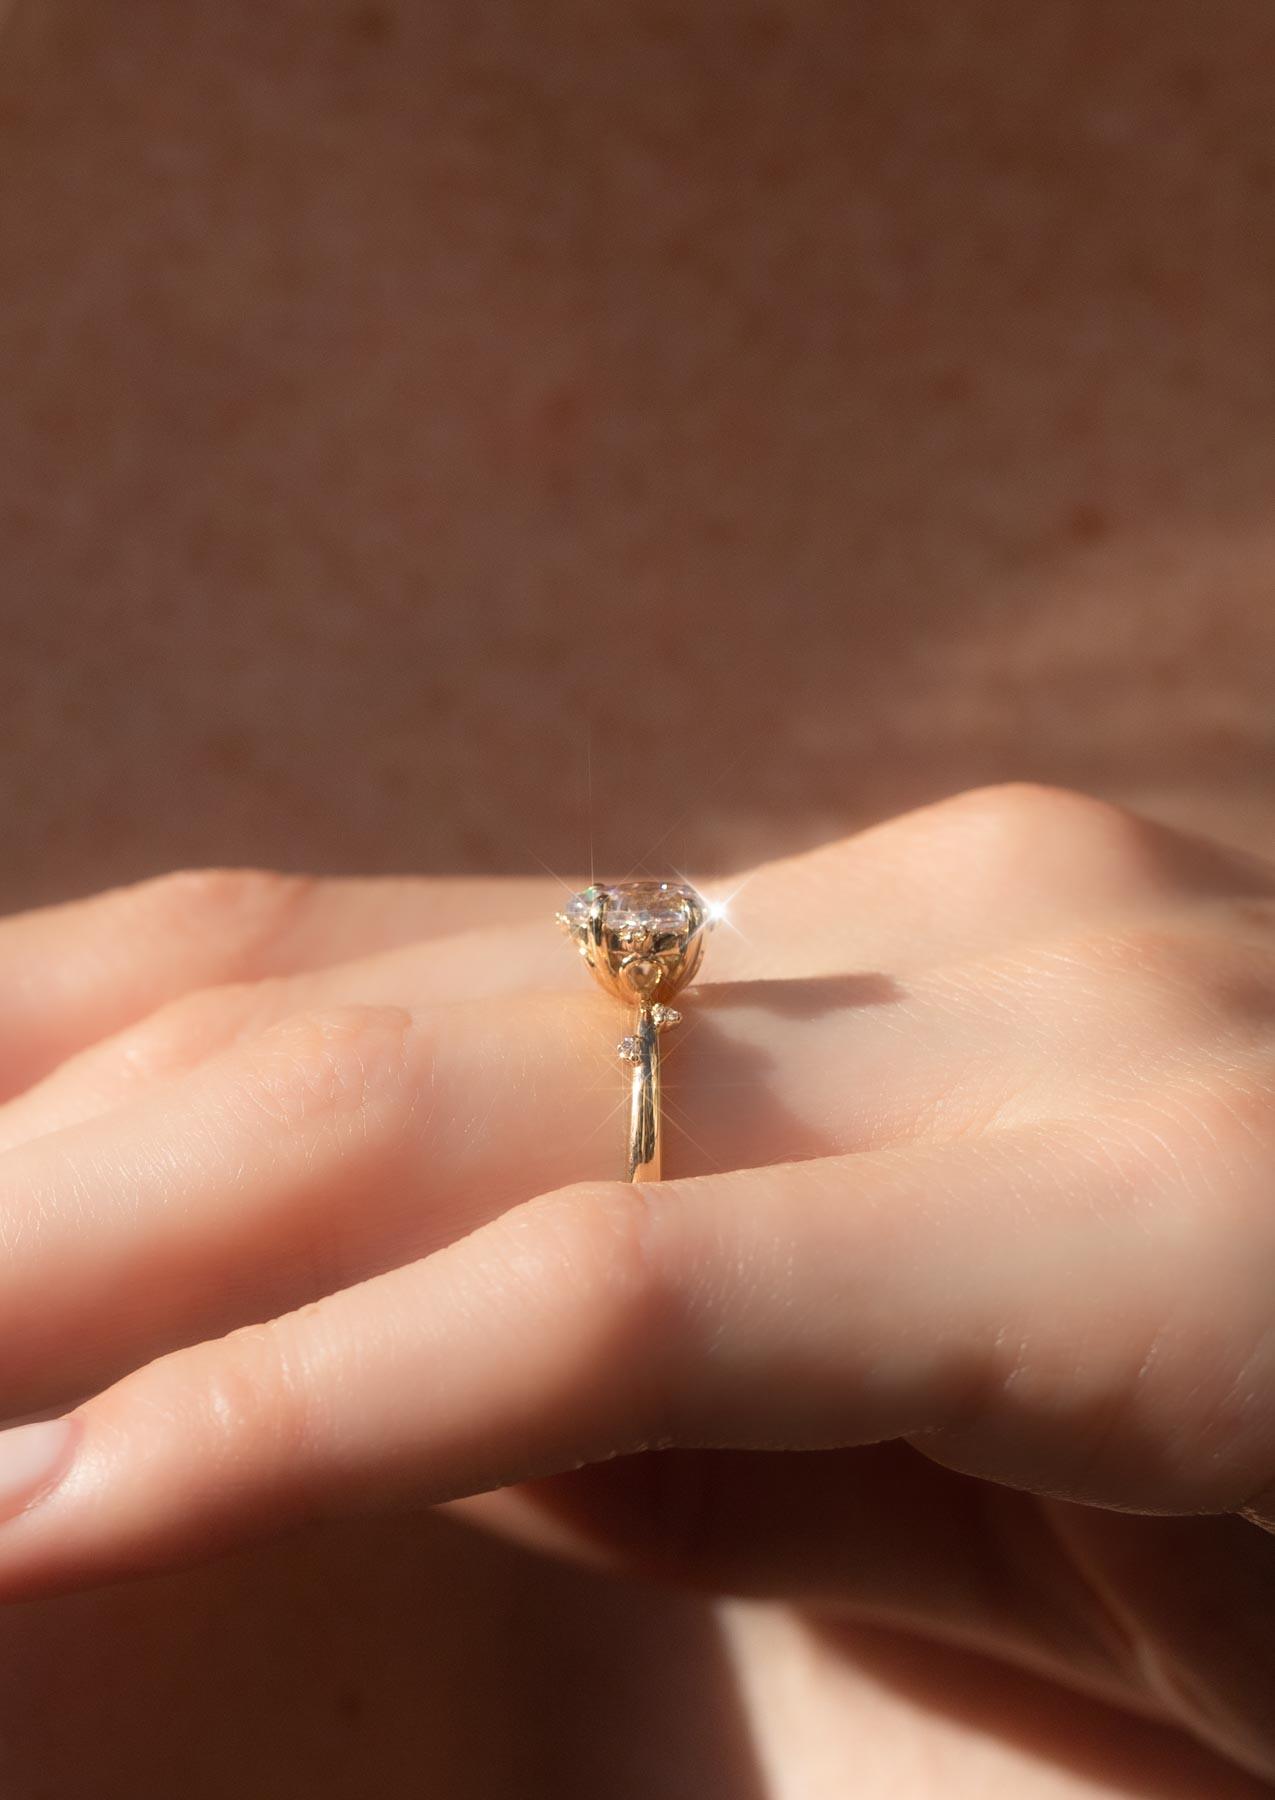 The Juniper White Gold Cultured Diamond Ring